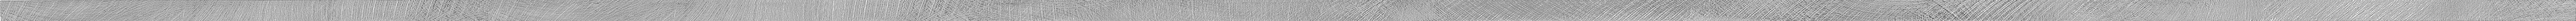 Bodenfliese,Wandfliese Marcacorona Strutturato Hithick Silver F654 strukturiert 0,5x120cm Silver Stick 8mm